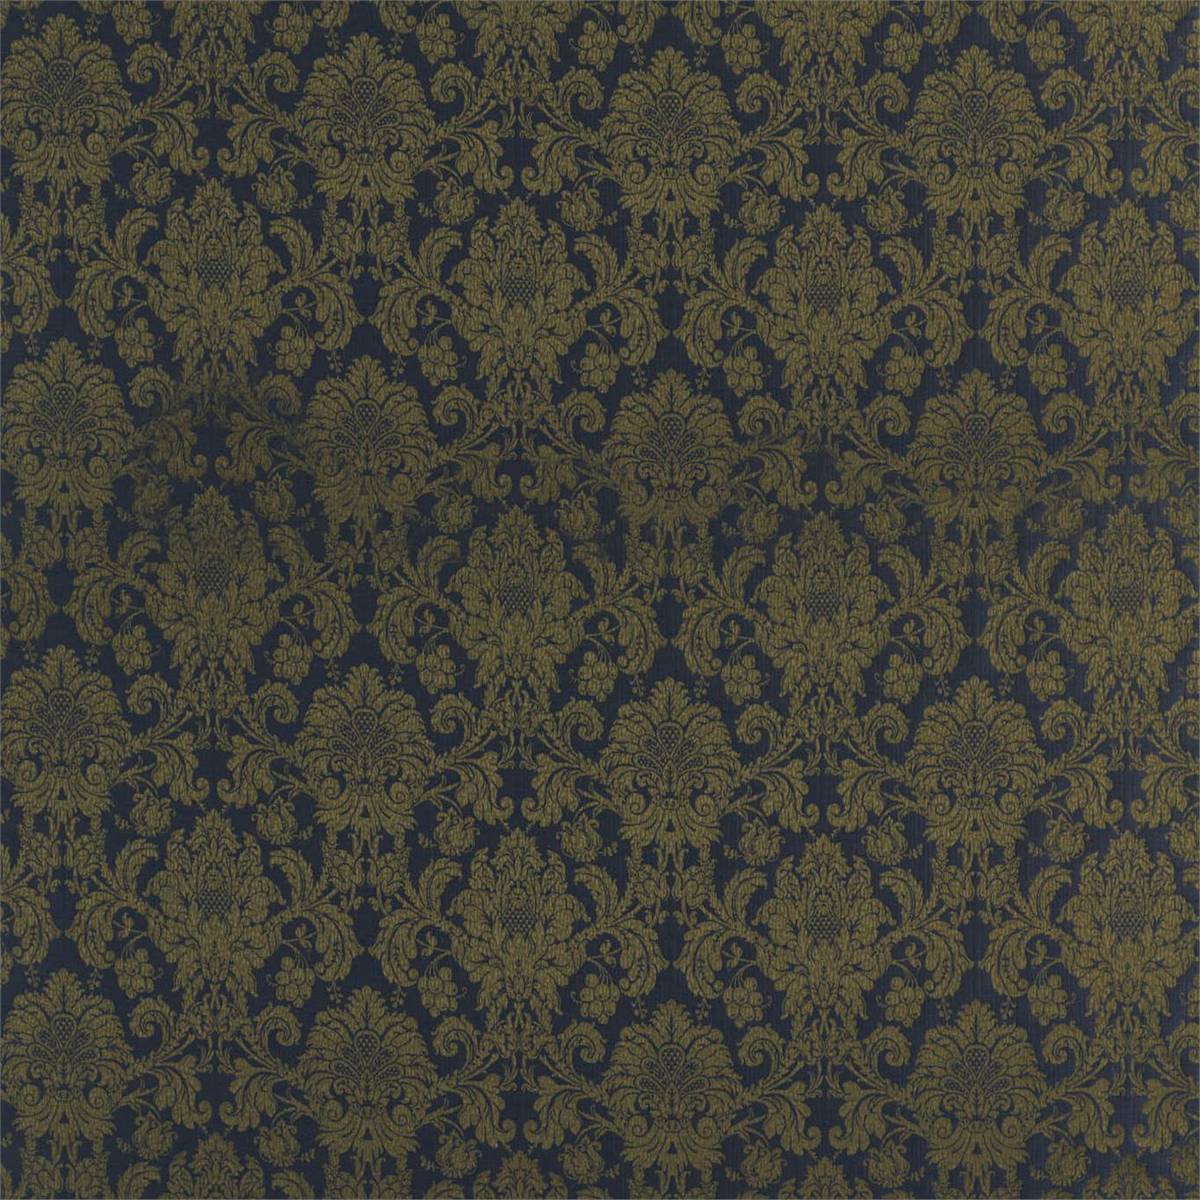 Crivelli Weave Olivine/Amethyst Fabric by Zoffany